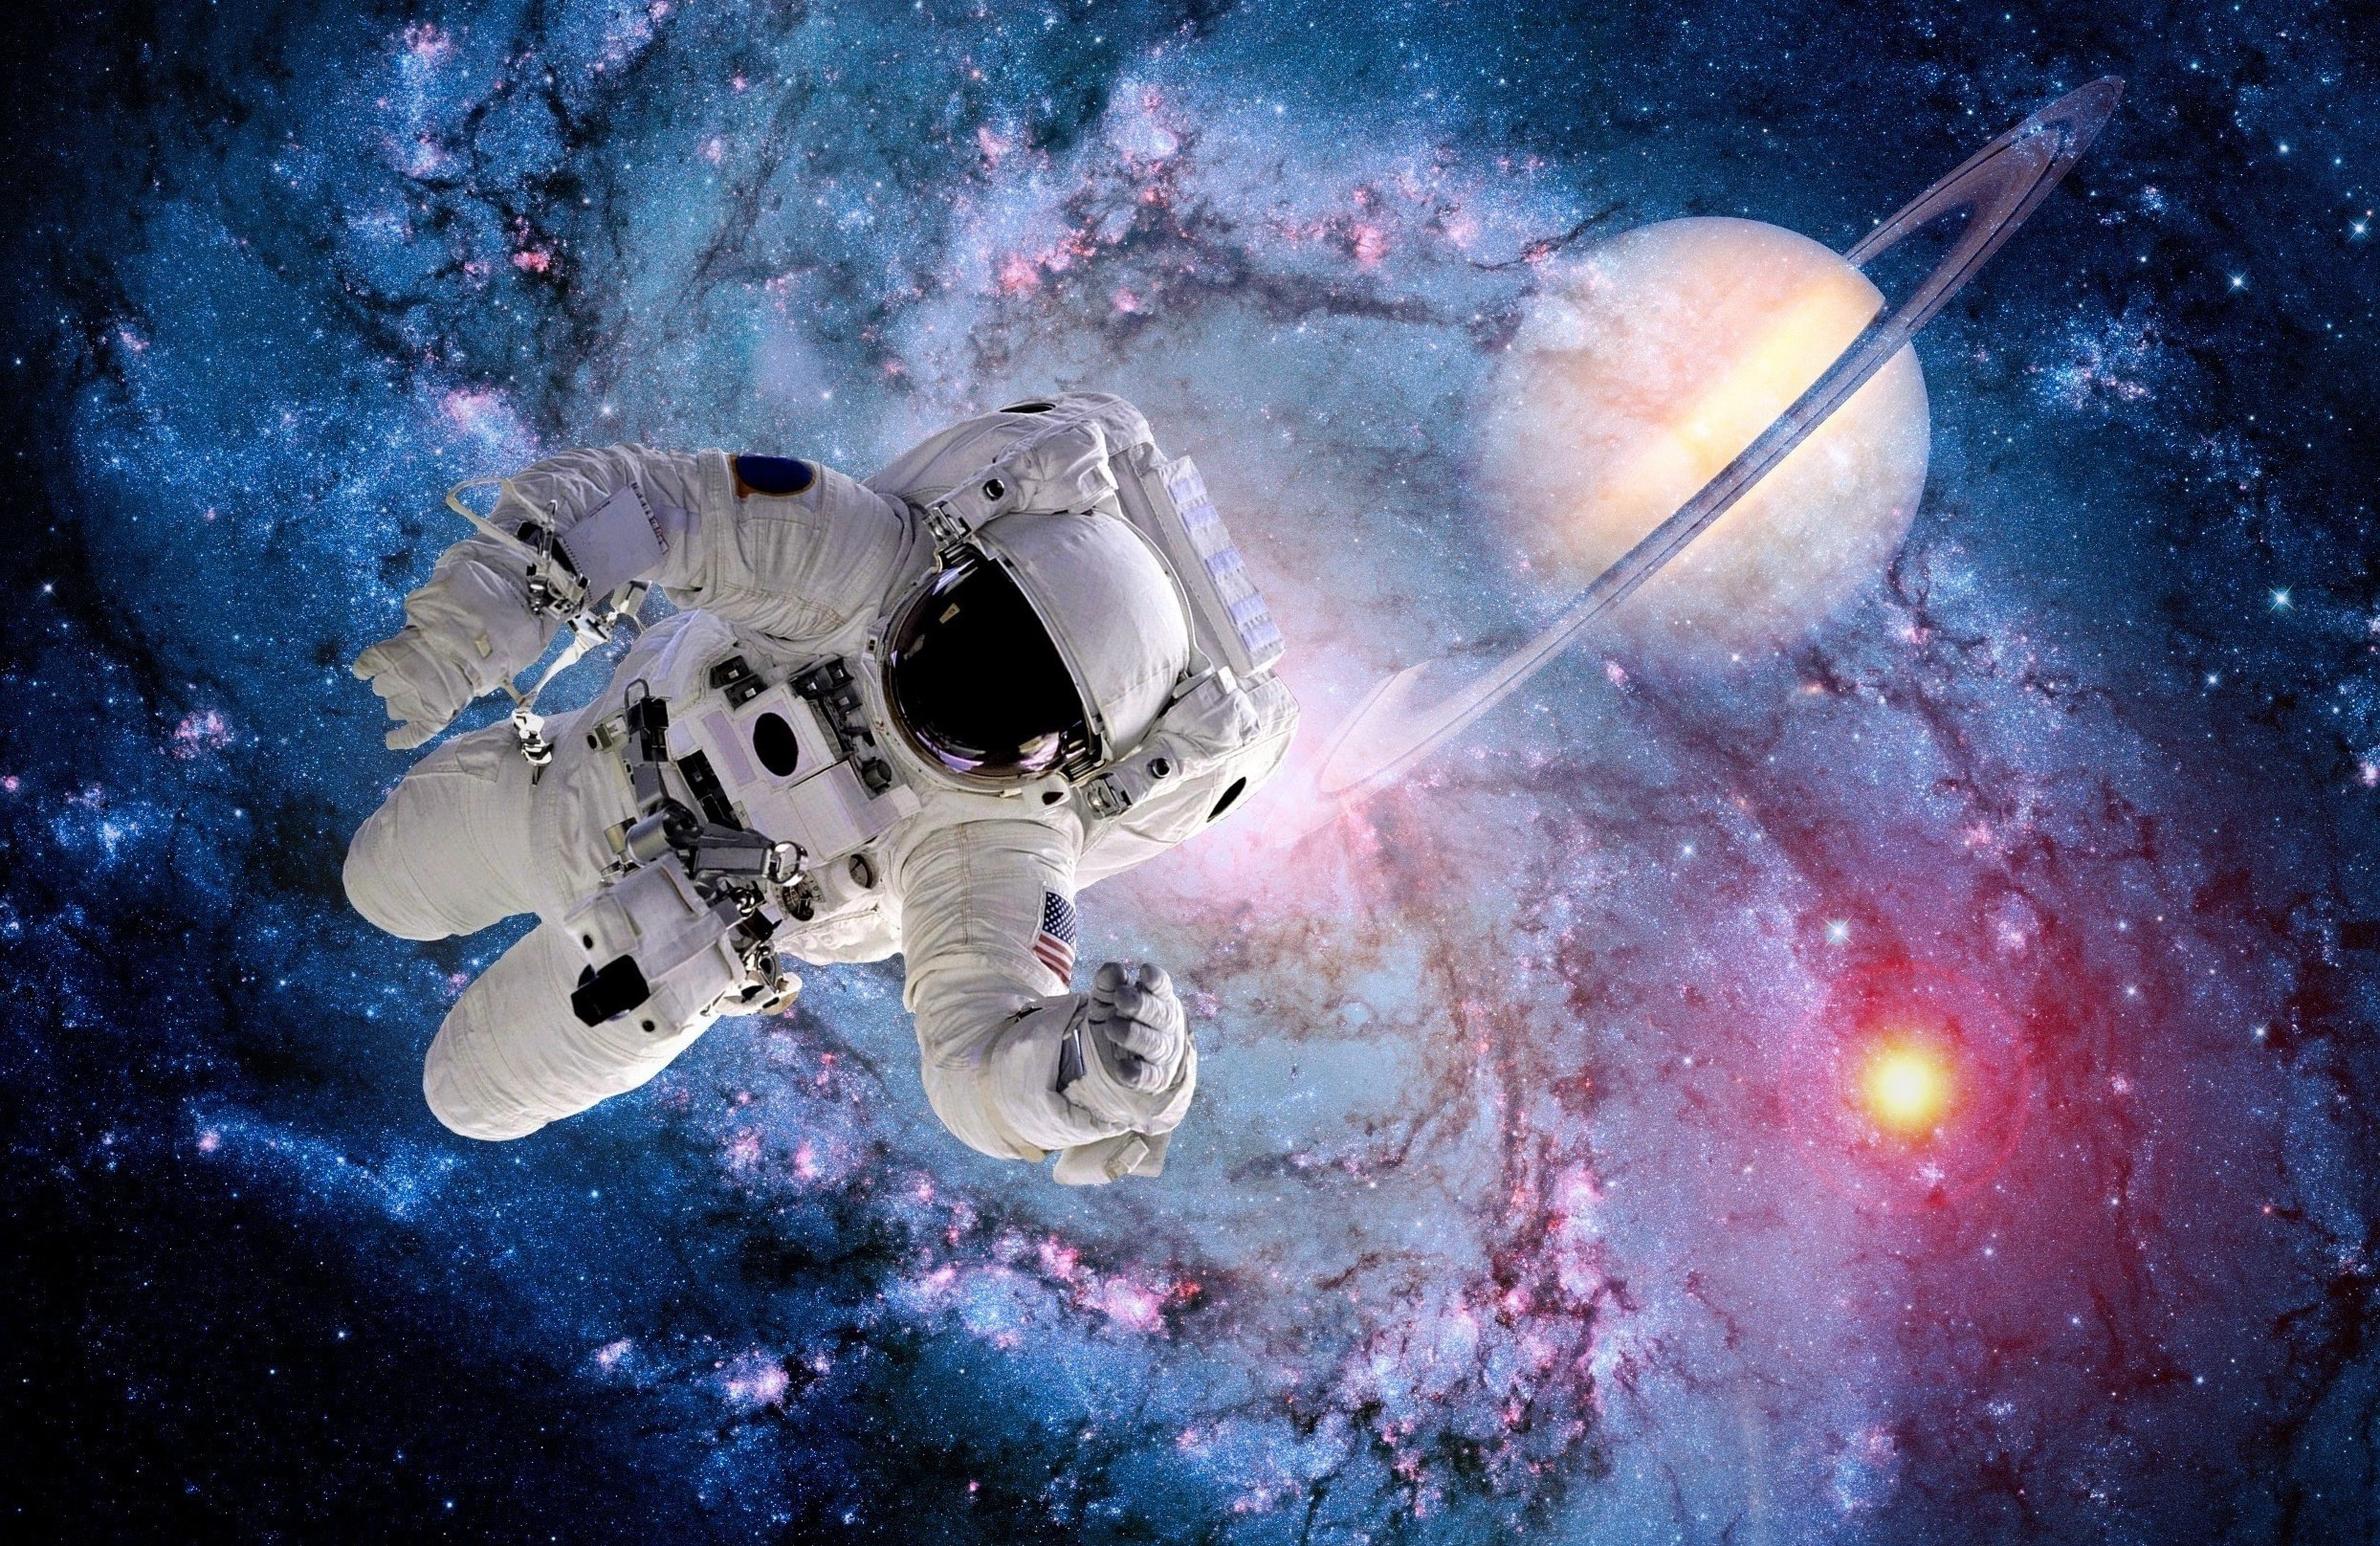  Astronaut 4k Ultra HD Wallpaper Background Image 